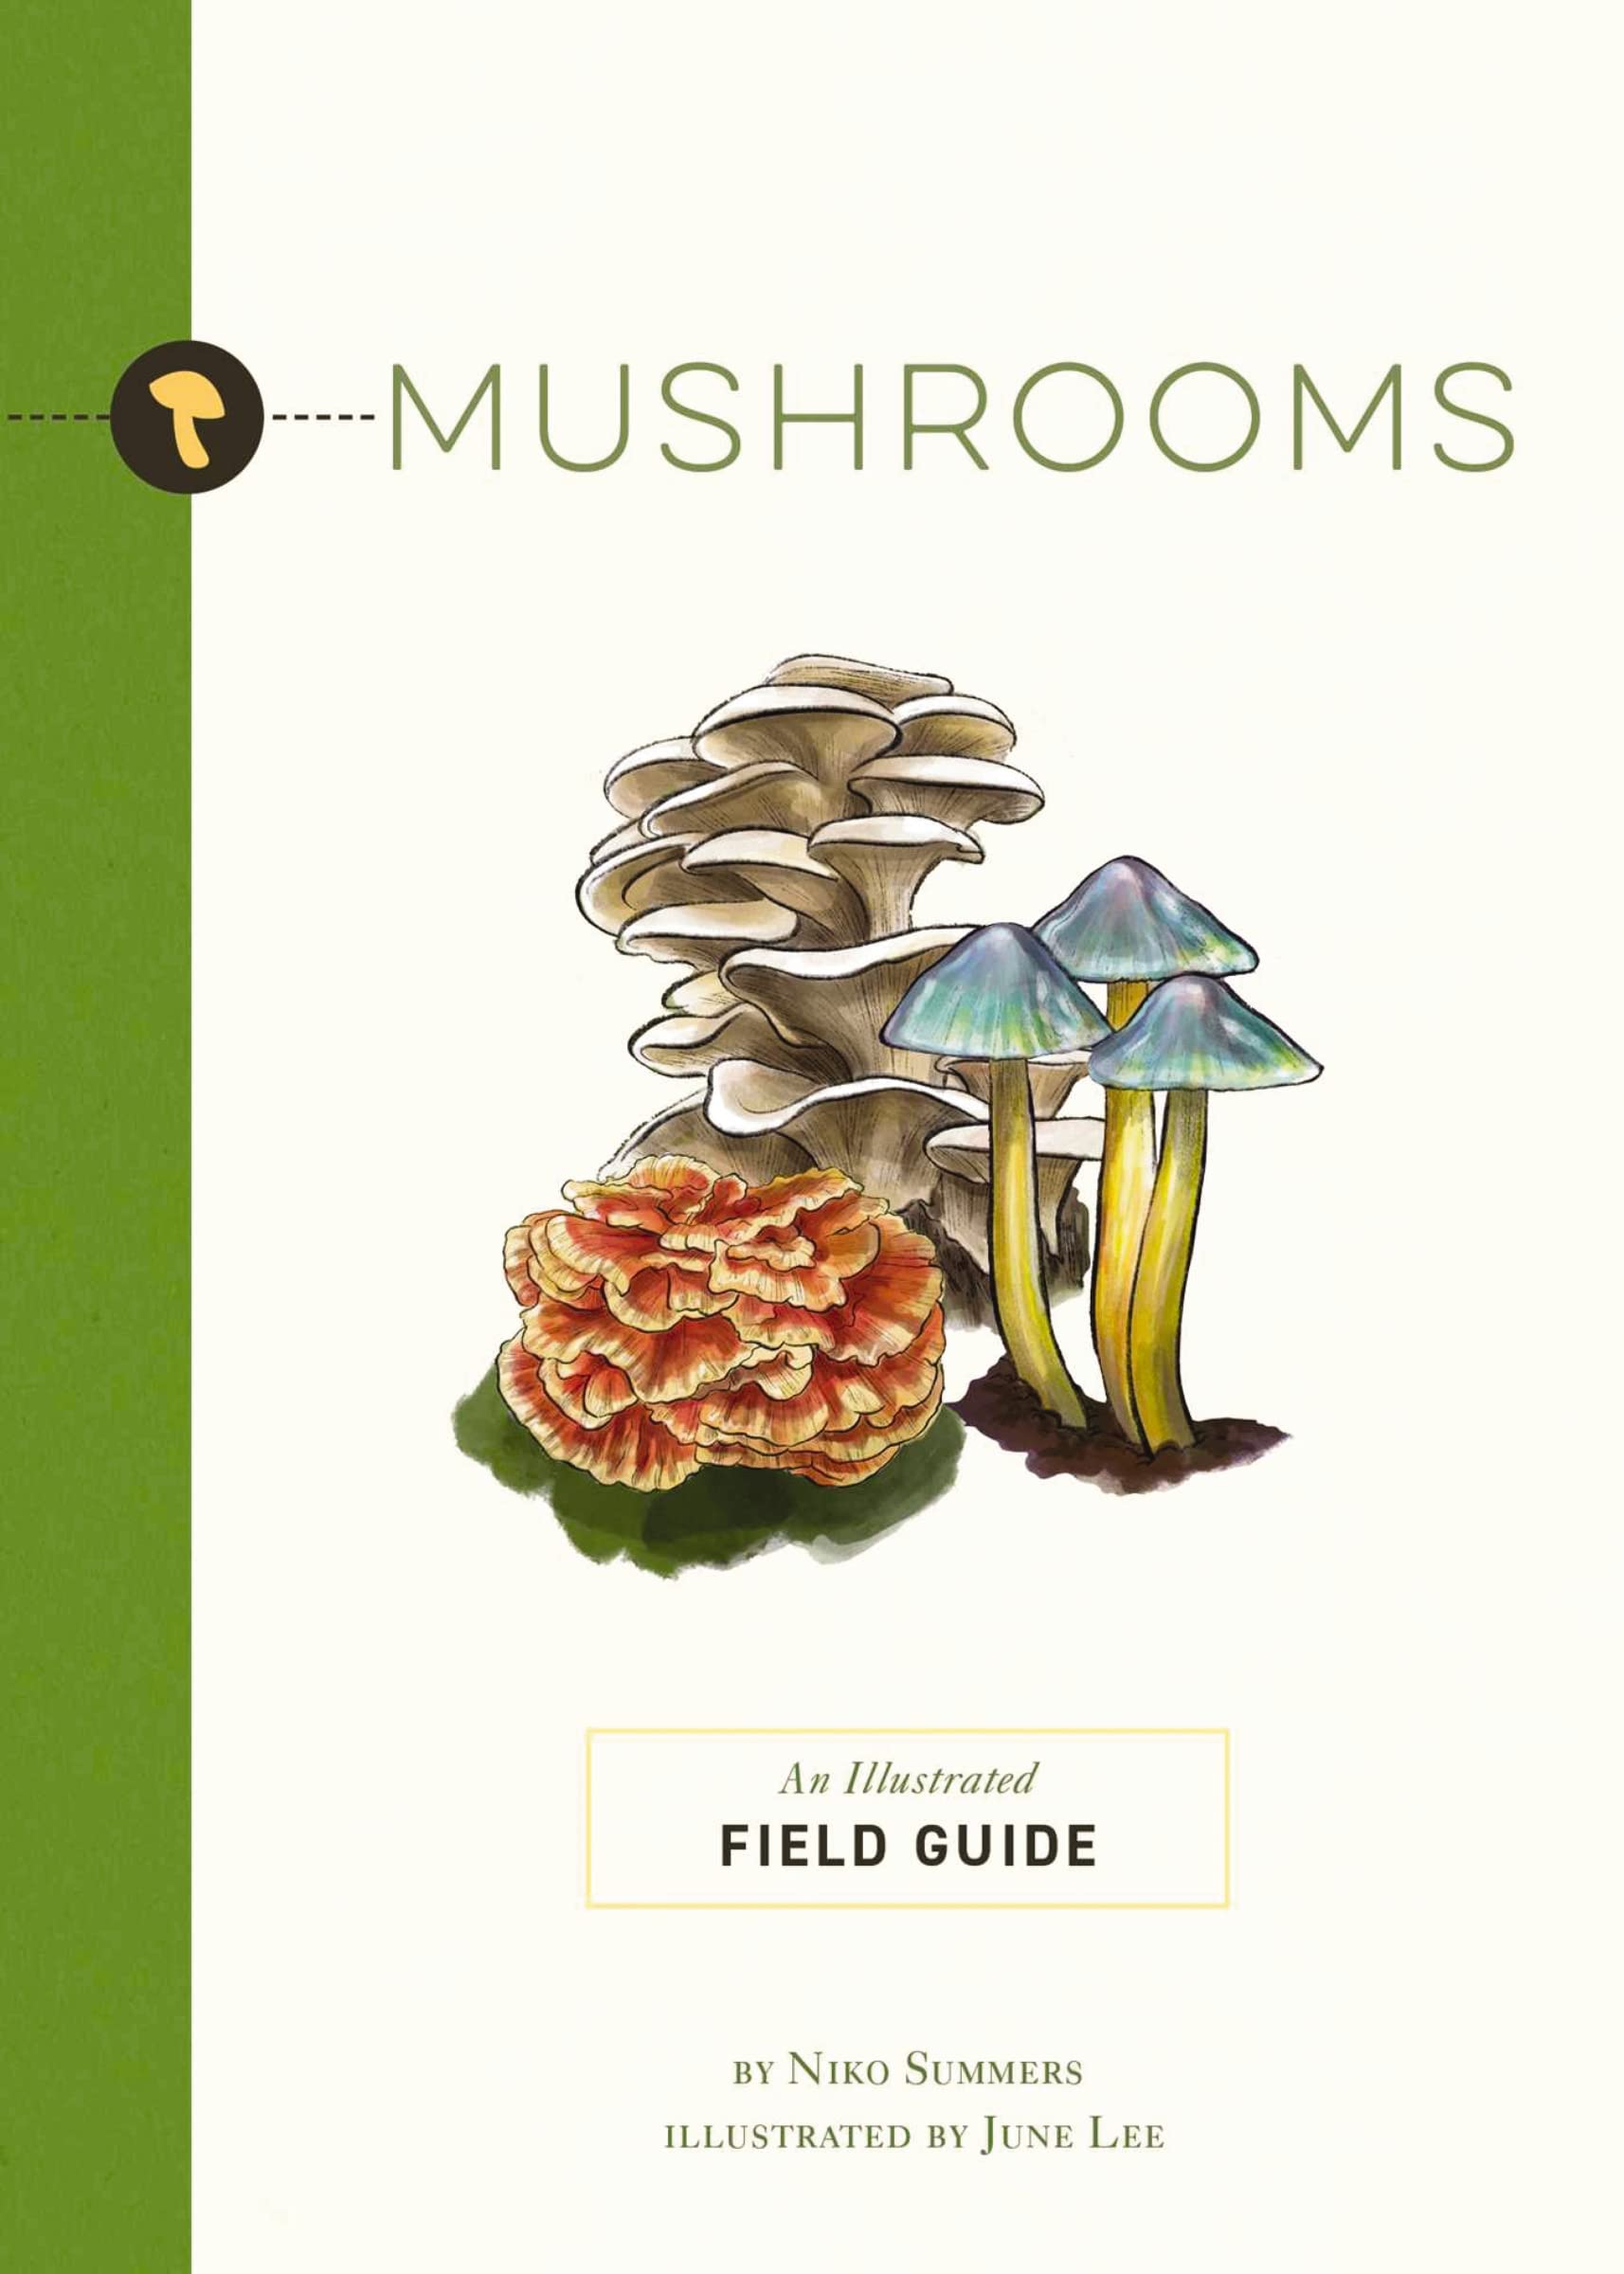 Mushrooms: An Illustrated Field (Niko Summers, June Lee)